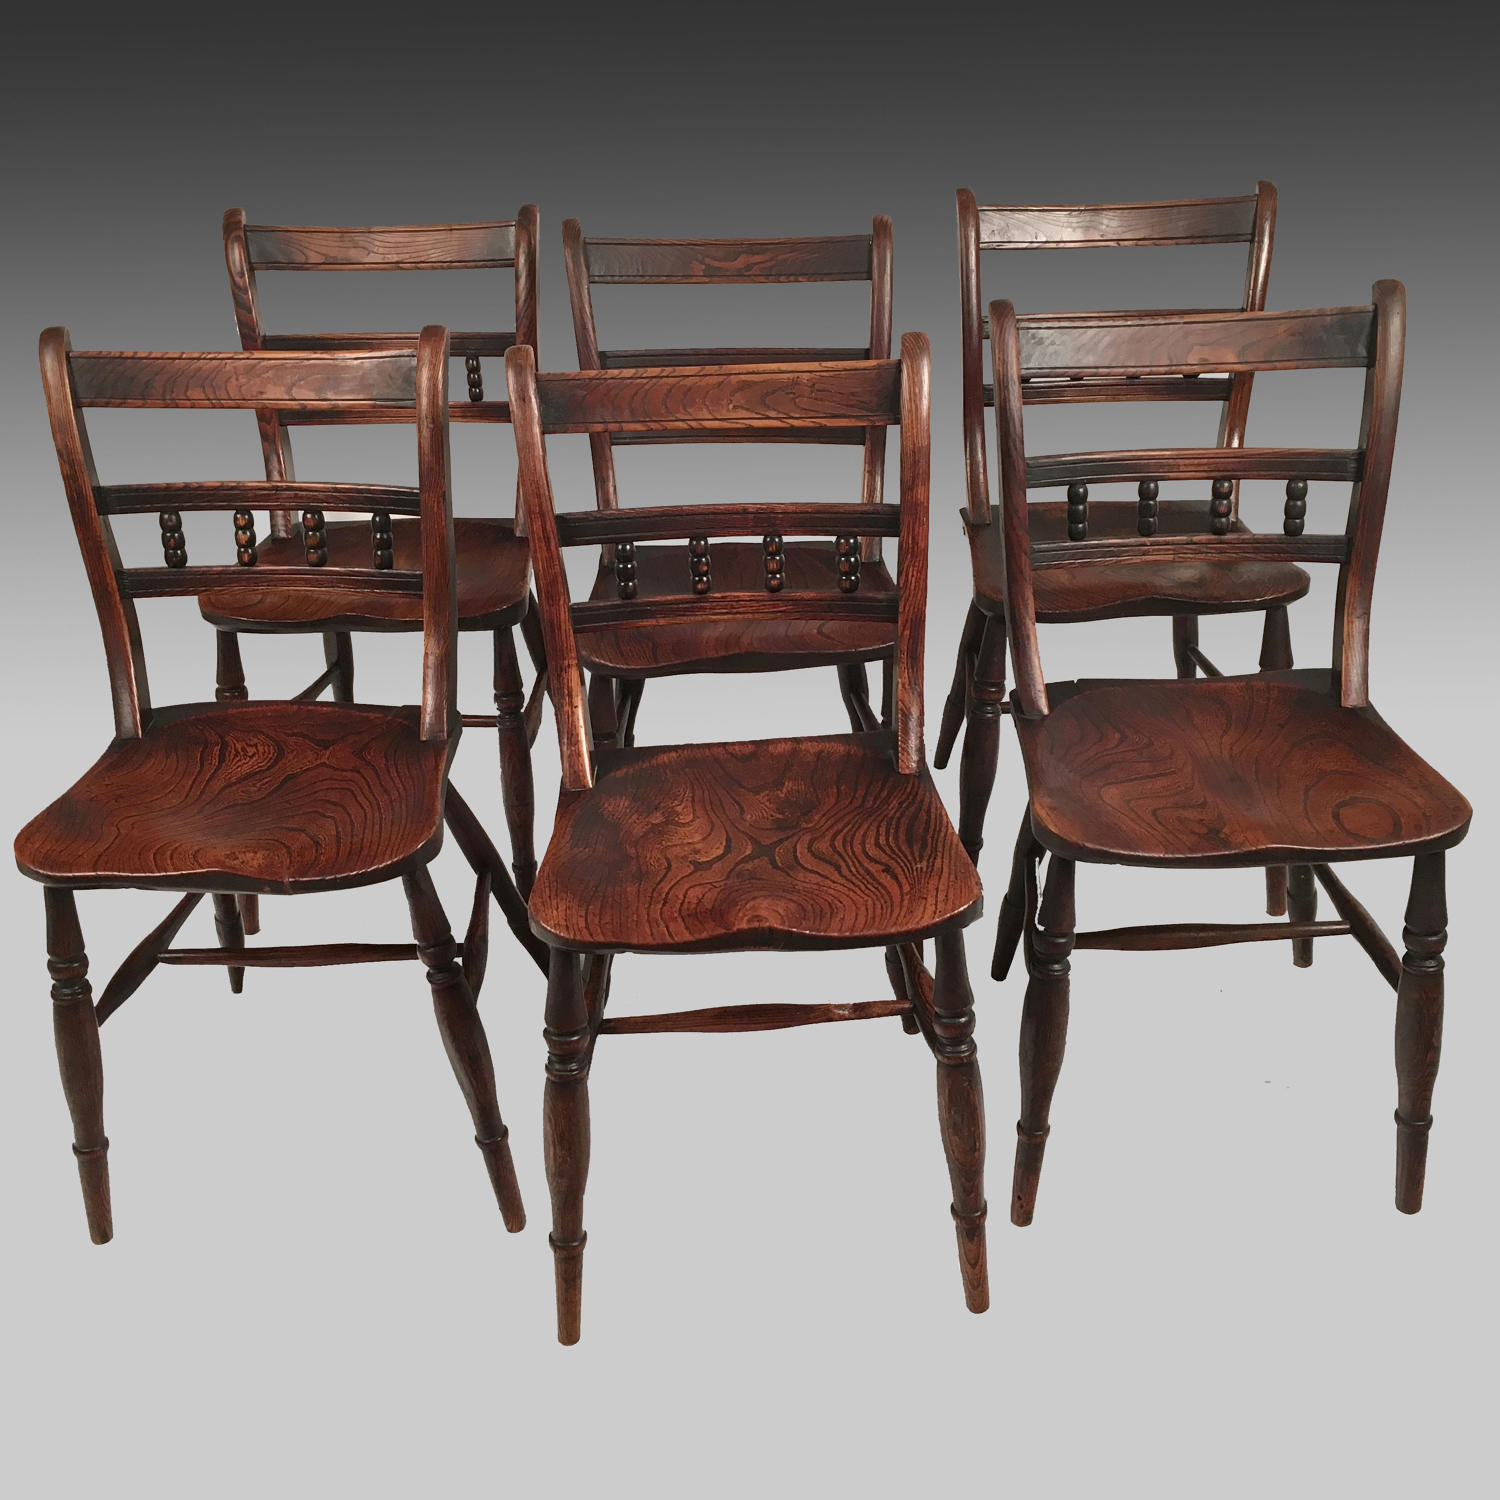 Set of nineteenth century Oxfordshire Windsor chairs